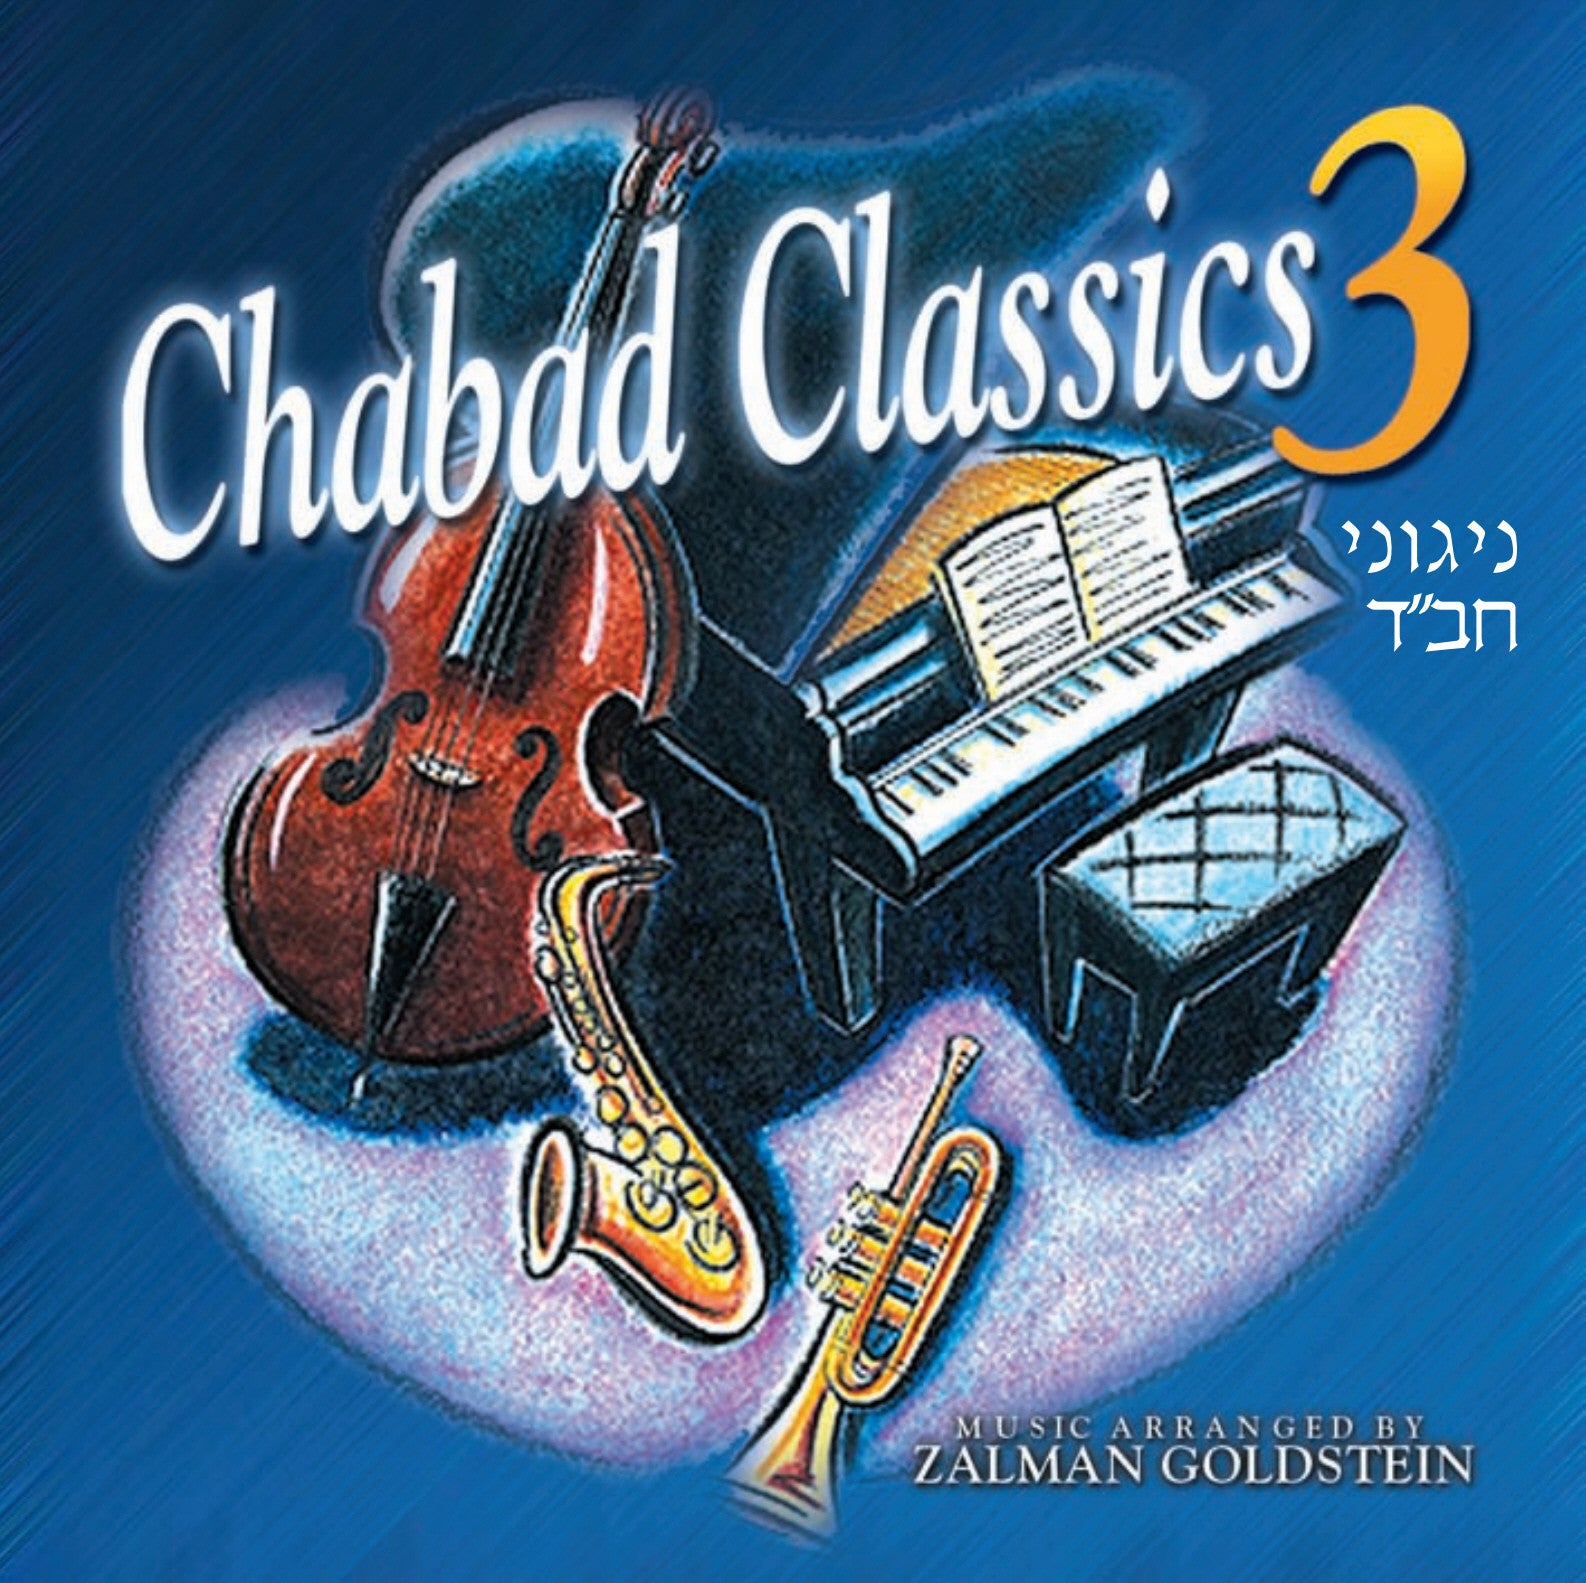 Zalman Goldstein - Chabad Classics 3